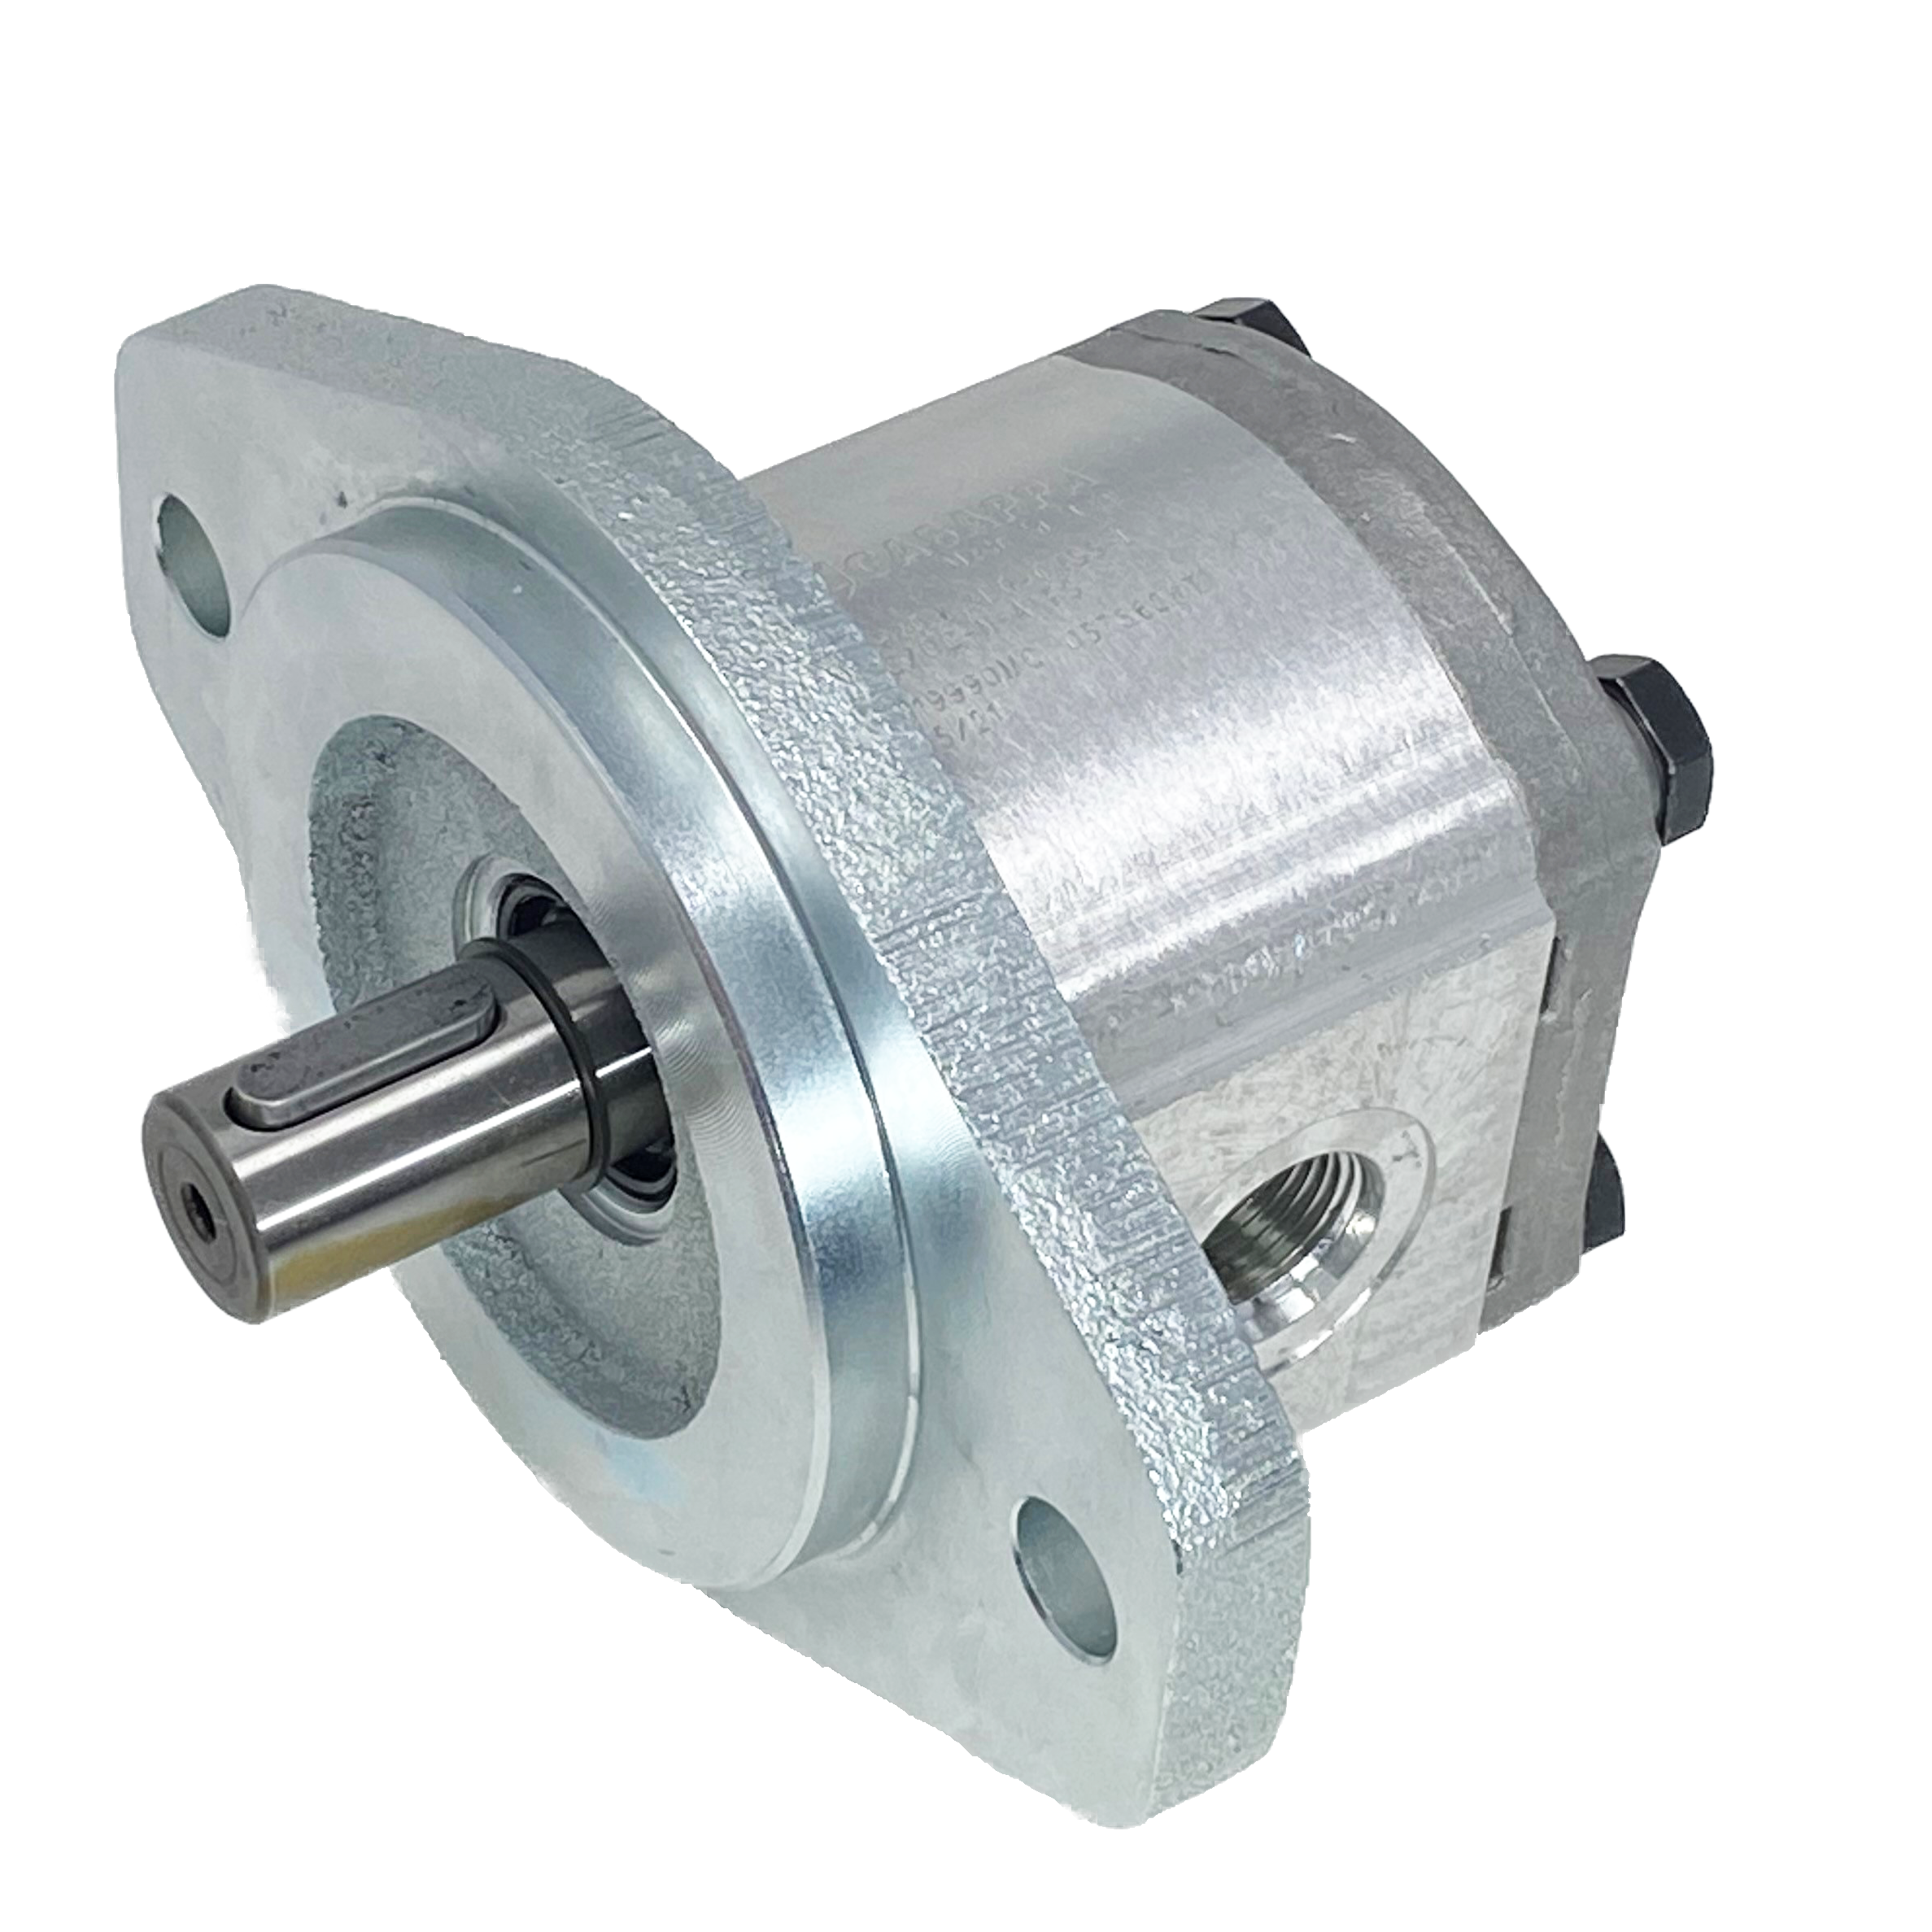 PLM20.9B0-32S5-LOC/OC-N-L : Casappa Polaris Gear Motor, 9.17cc, 3625psi Rated, 3500RPM, Reversible Interior Drain, 3/4" Bore x 1/4" Key Shaft, SAE B 2-Bolt Flange, 0.625 (5/8") #10 SAE Inlet, 0.625 (5/8") #10 SAE Outlet, Aluminum Body, Cast Iron Flange